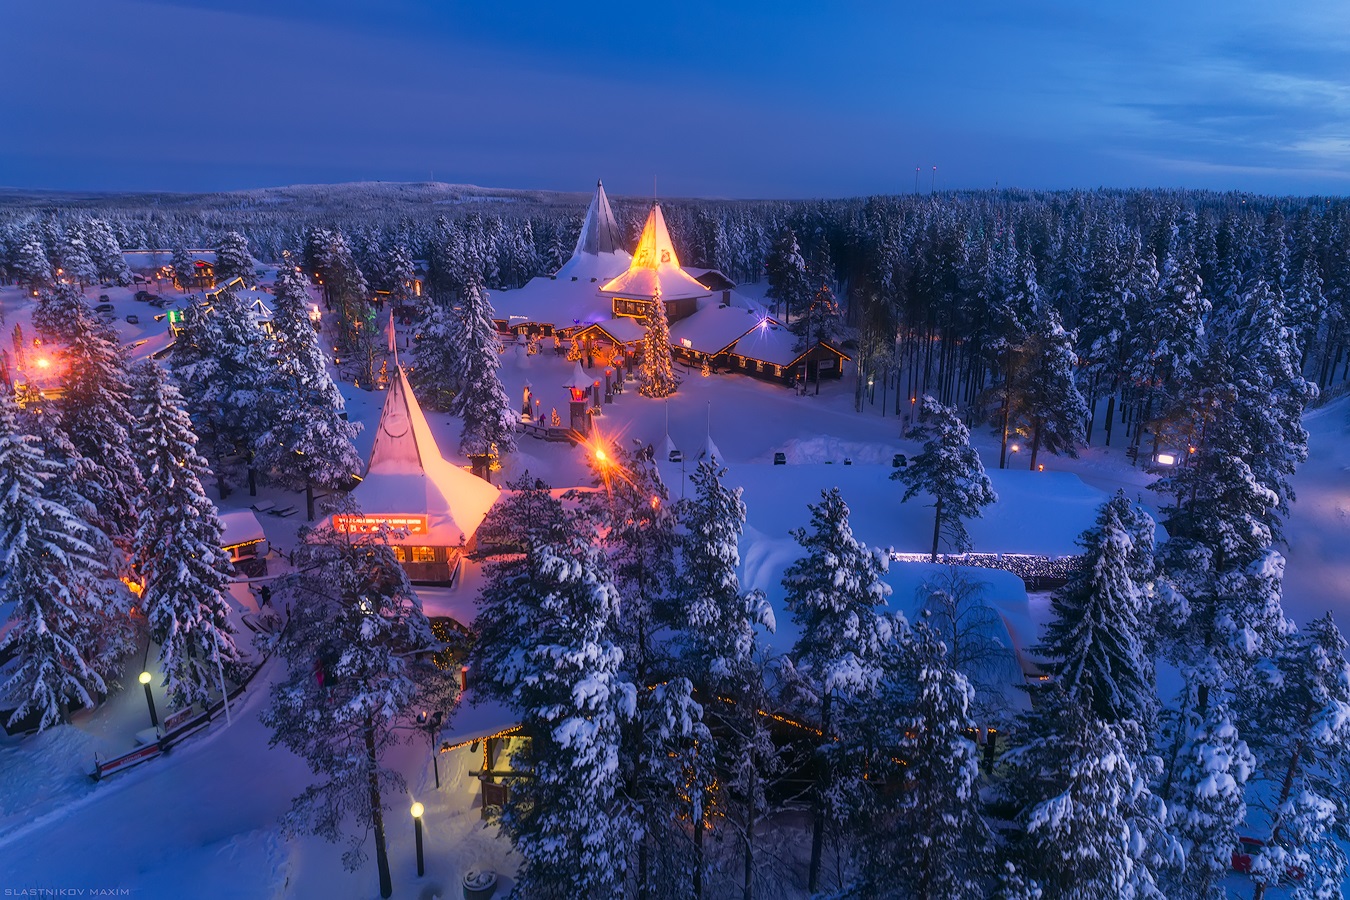 The magic village of Santa Claus, Rovaniemi, Finland